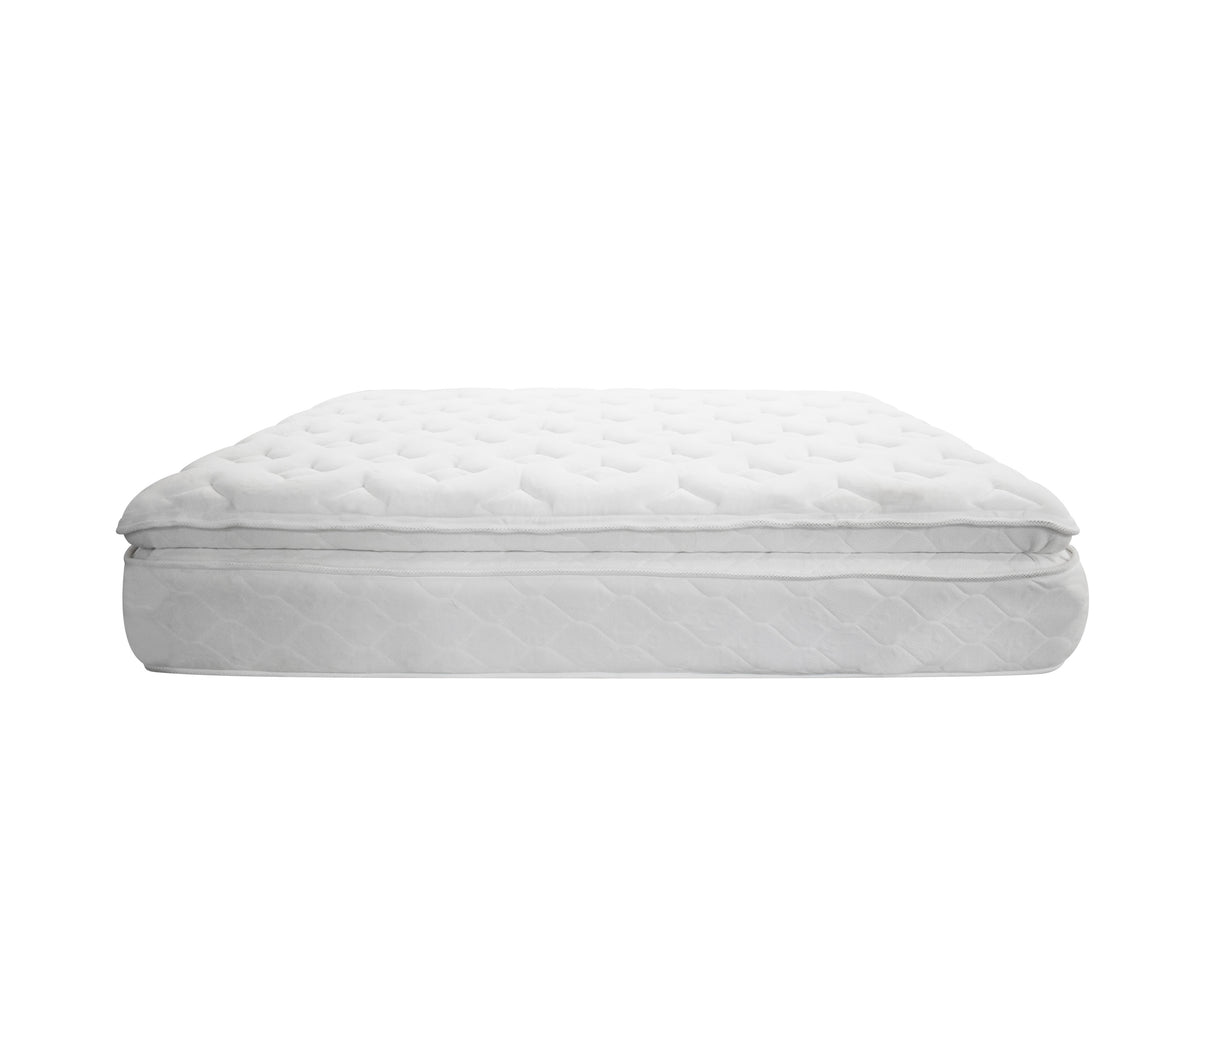 Colchón king (200cm X 200cm) perfect slepper 1 pillow memory foam encapsulado Serta